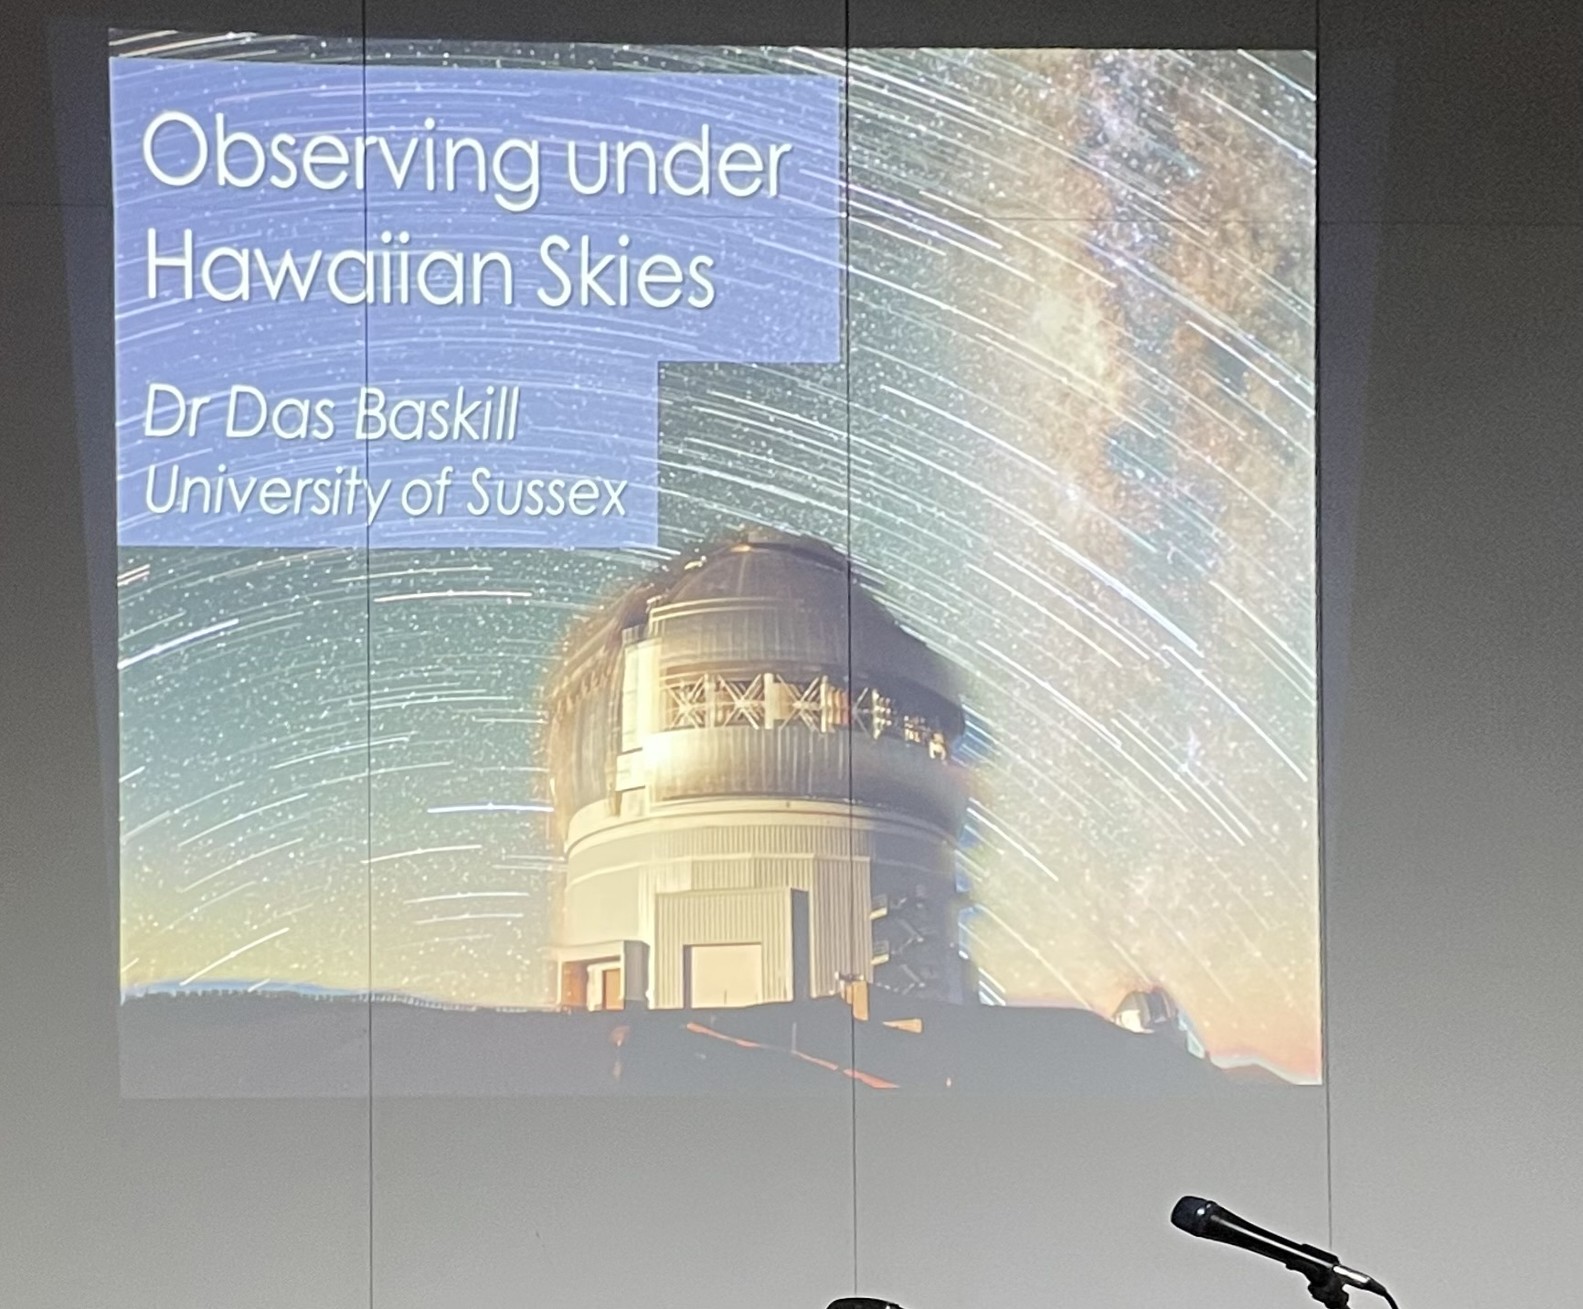 Title slide: “observing under Hawaiian Skies” Dr Das Baskill, University of Sussex